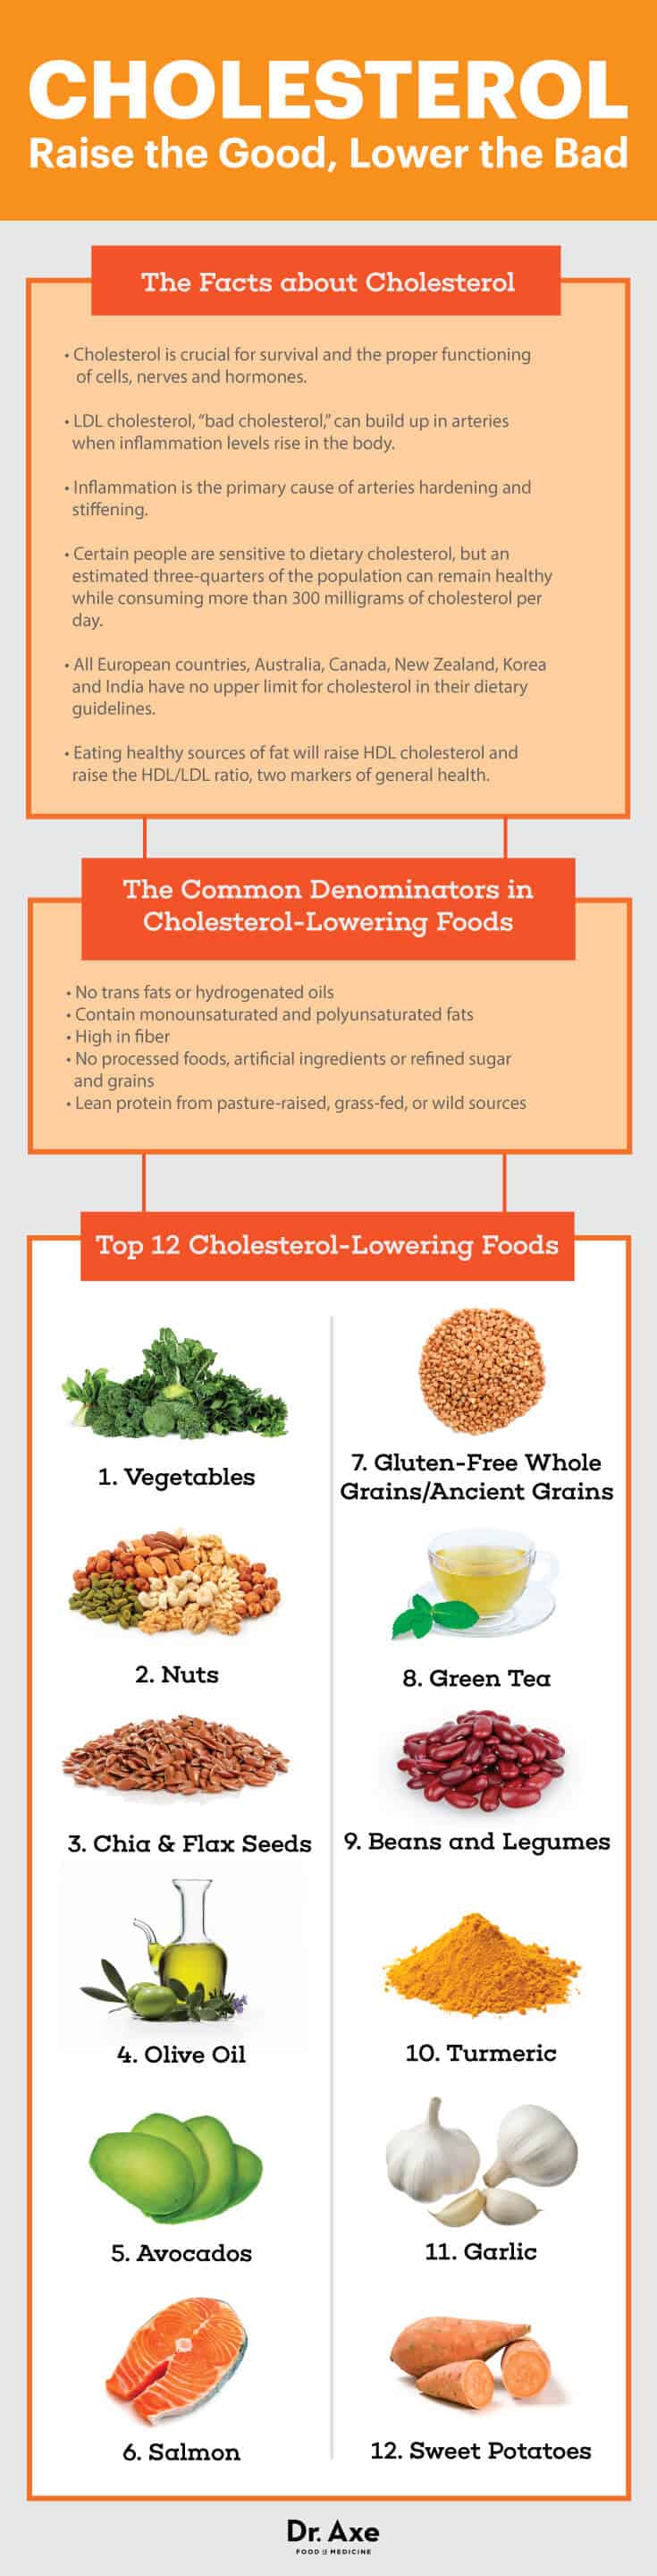 top-12-cholesterol-lowering-foods-dr-axe